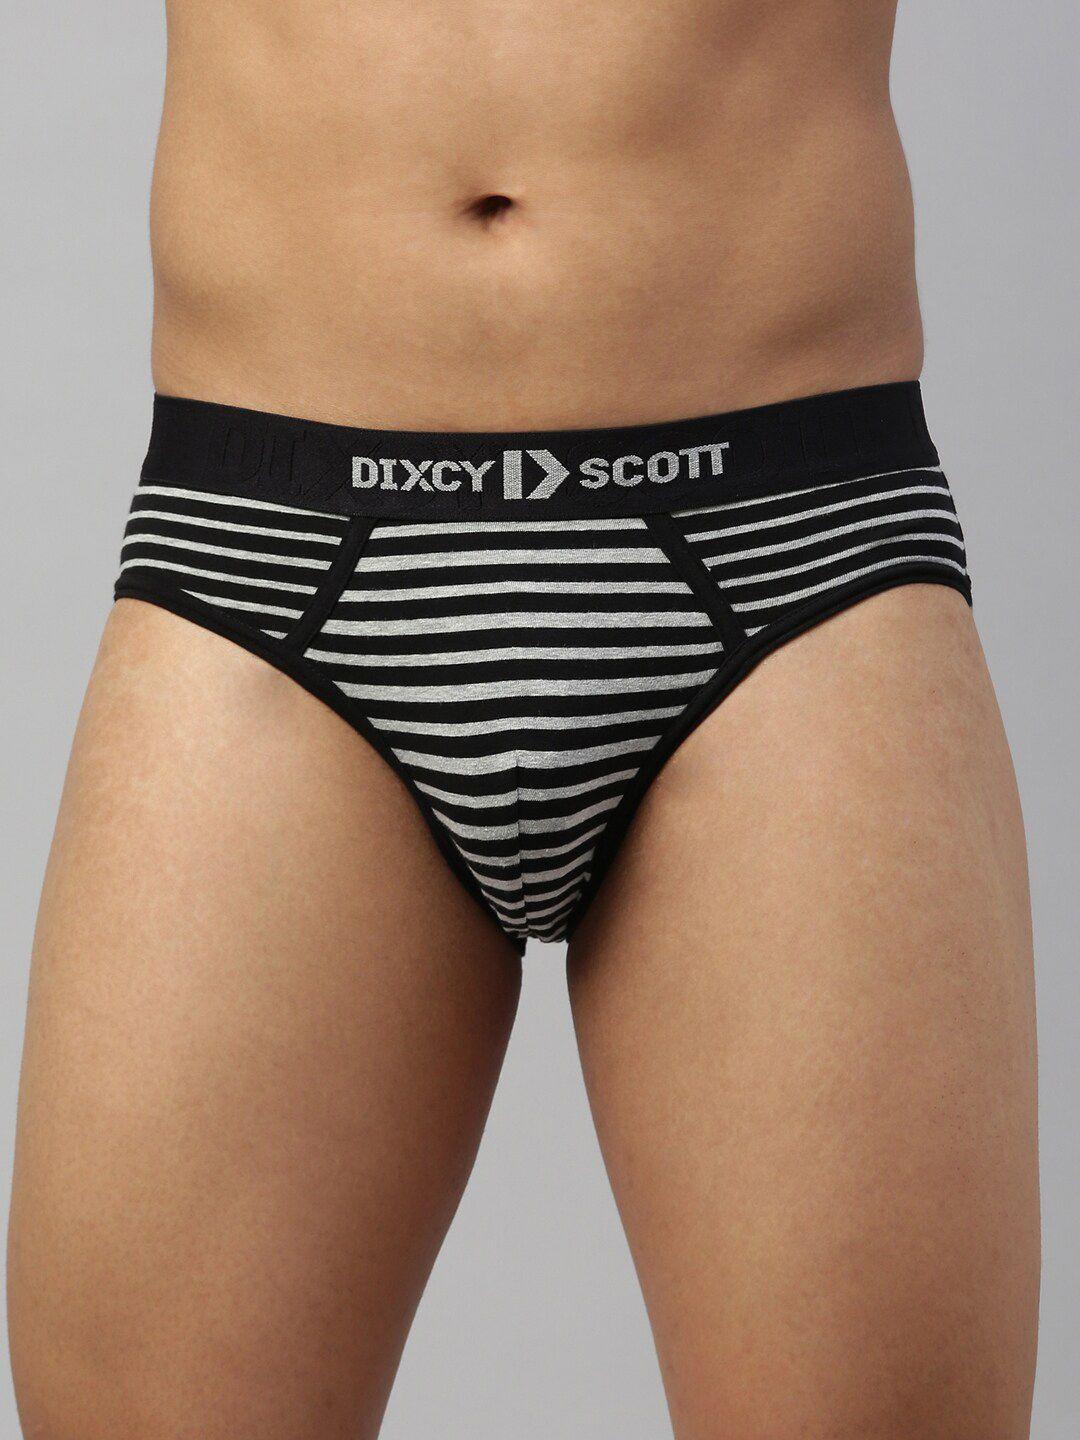 dixcy-scott-maximus-men-black-&-grey-striped-basic-briefs-maxb-006-flux-brief-p1